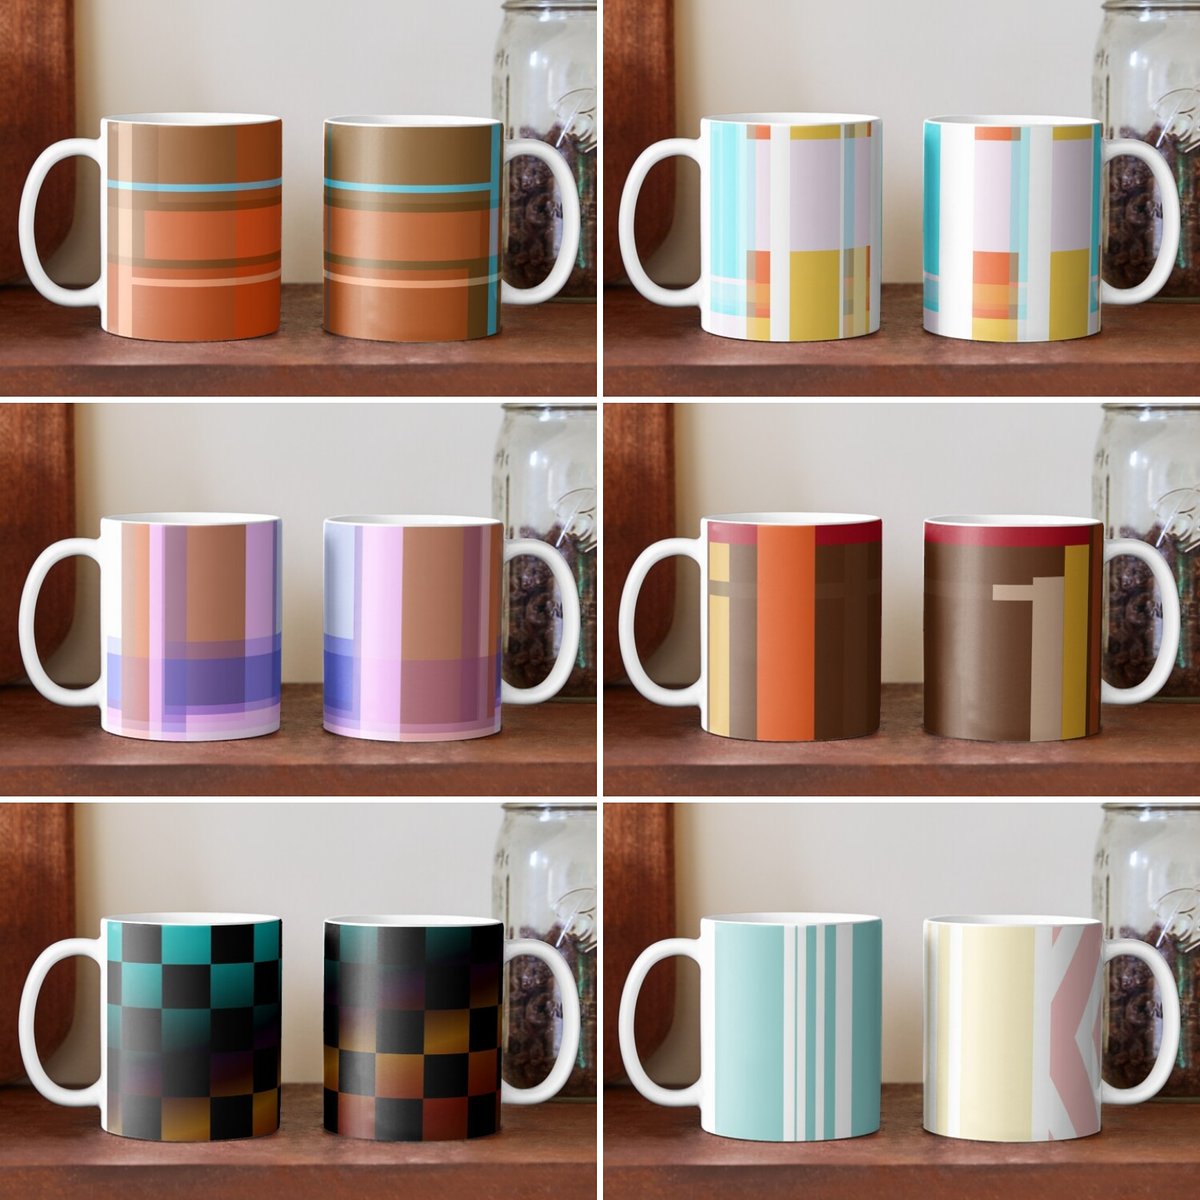 Shop: GeekeryArt on #redbubble / #kitchendecor #kitchenstuff #mugs #coffee #tea #design #decor #stripes #plaid #cozy